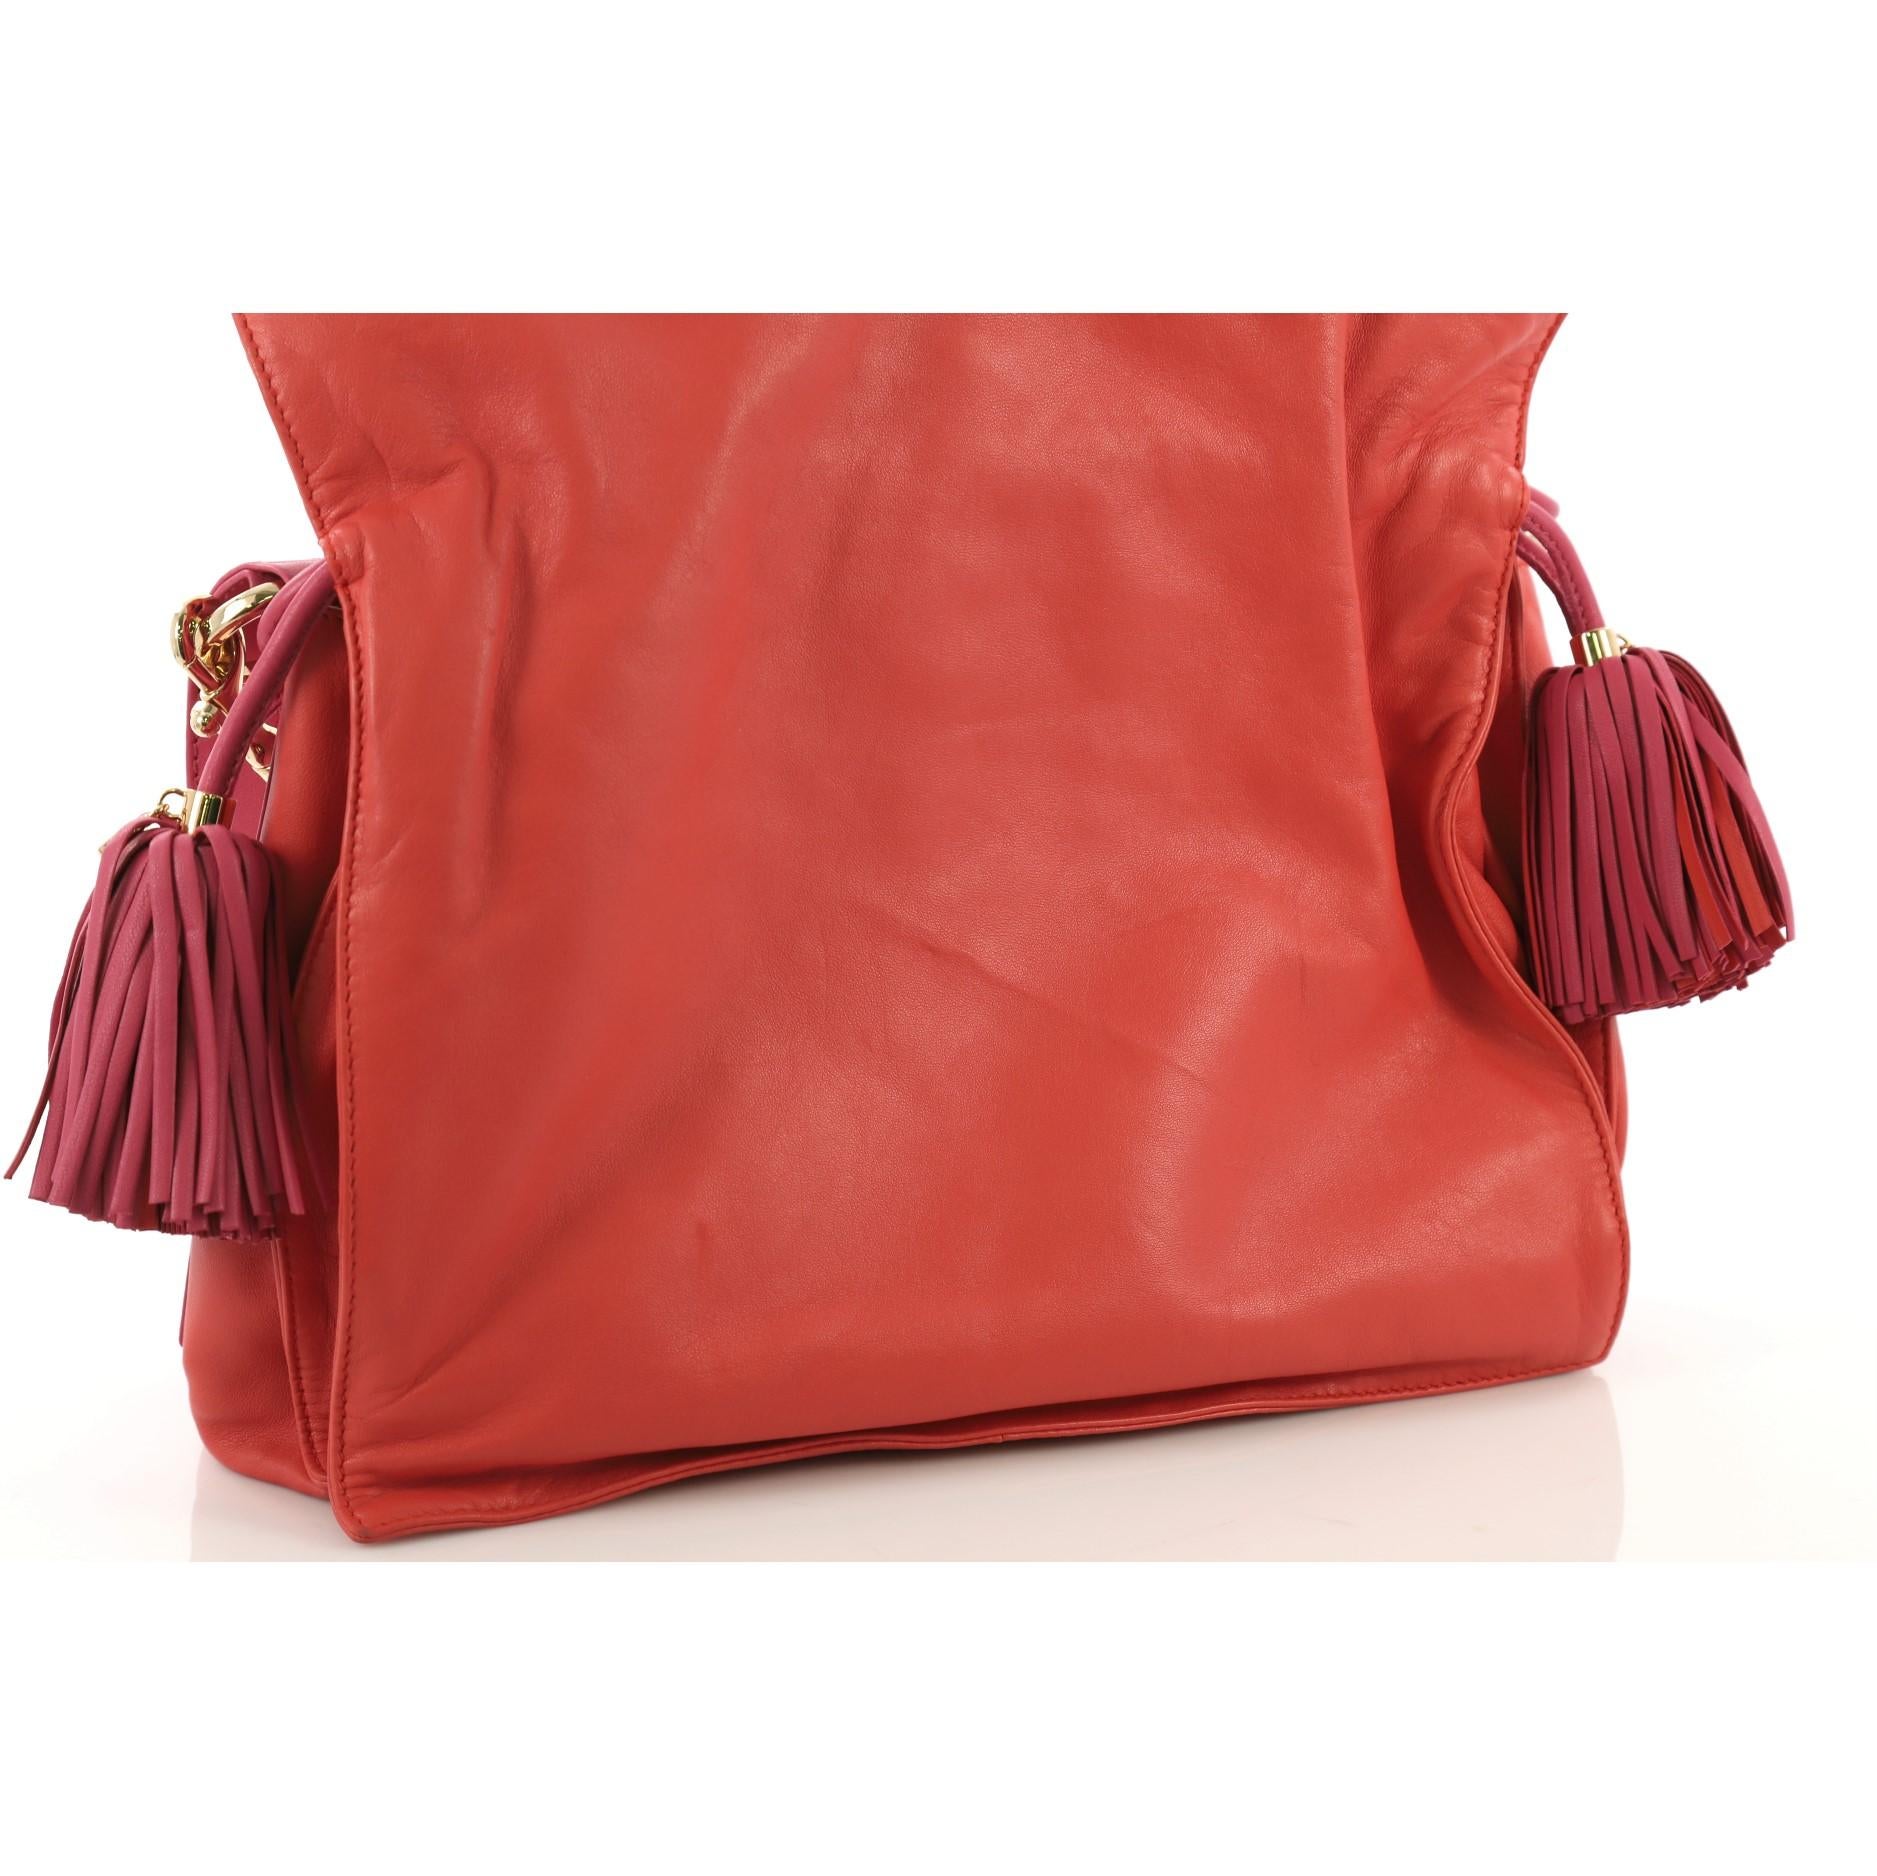 Orange Loewe Flamenco Bag Leather Medium